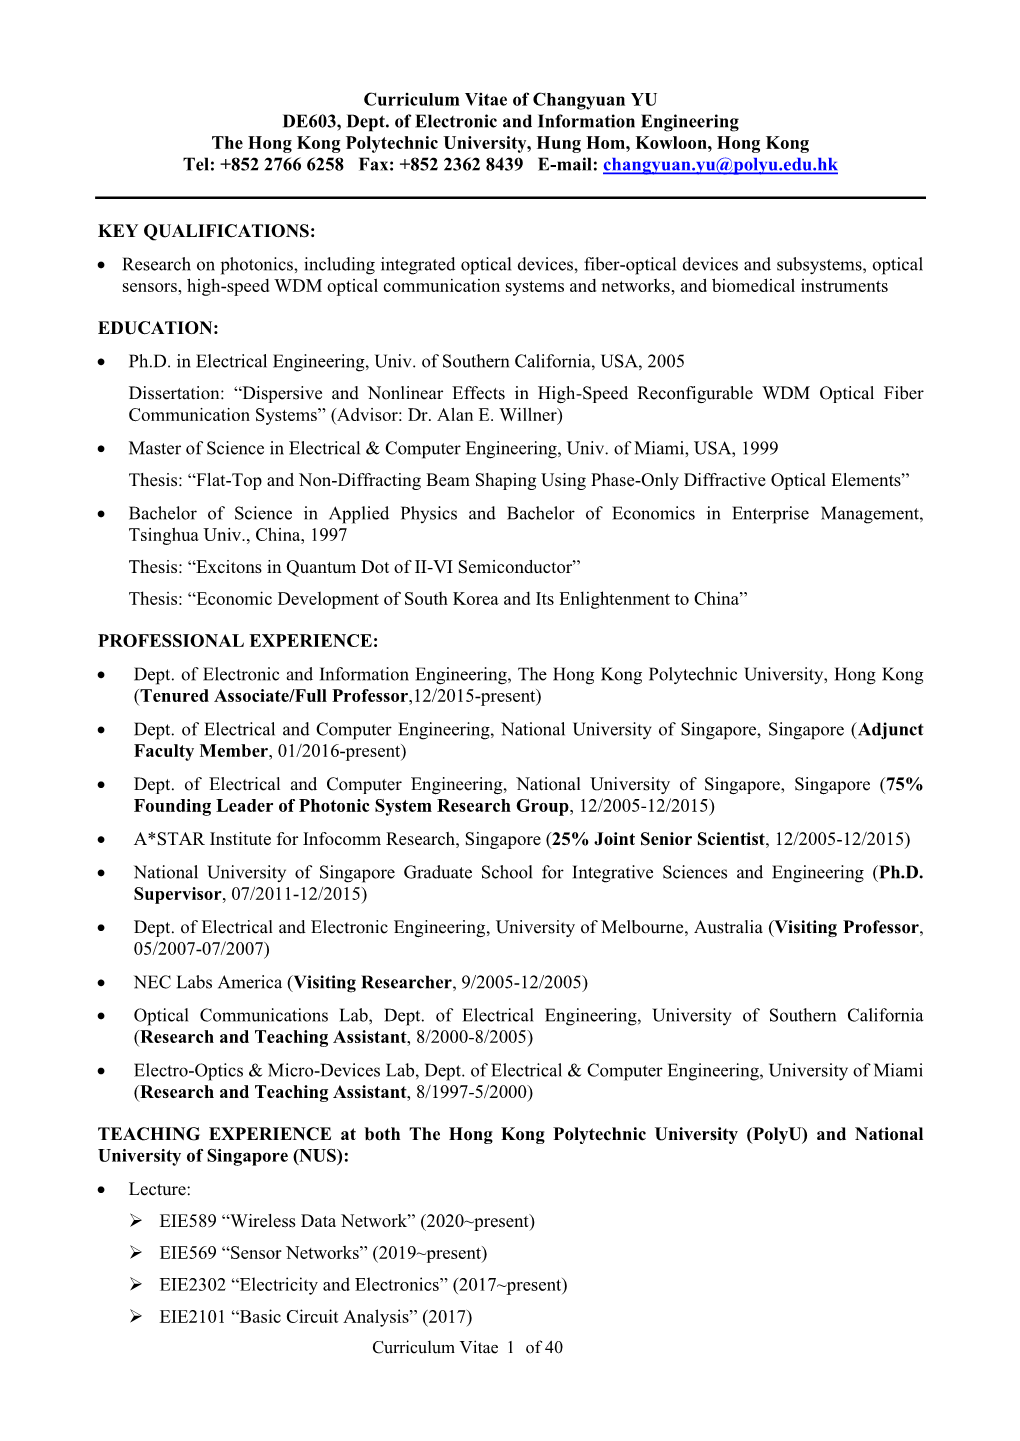 Curriculum Vitae of Changyuan YU DE603, Dept. of Electronic And